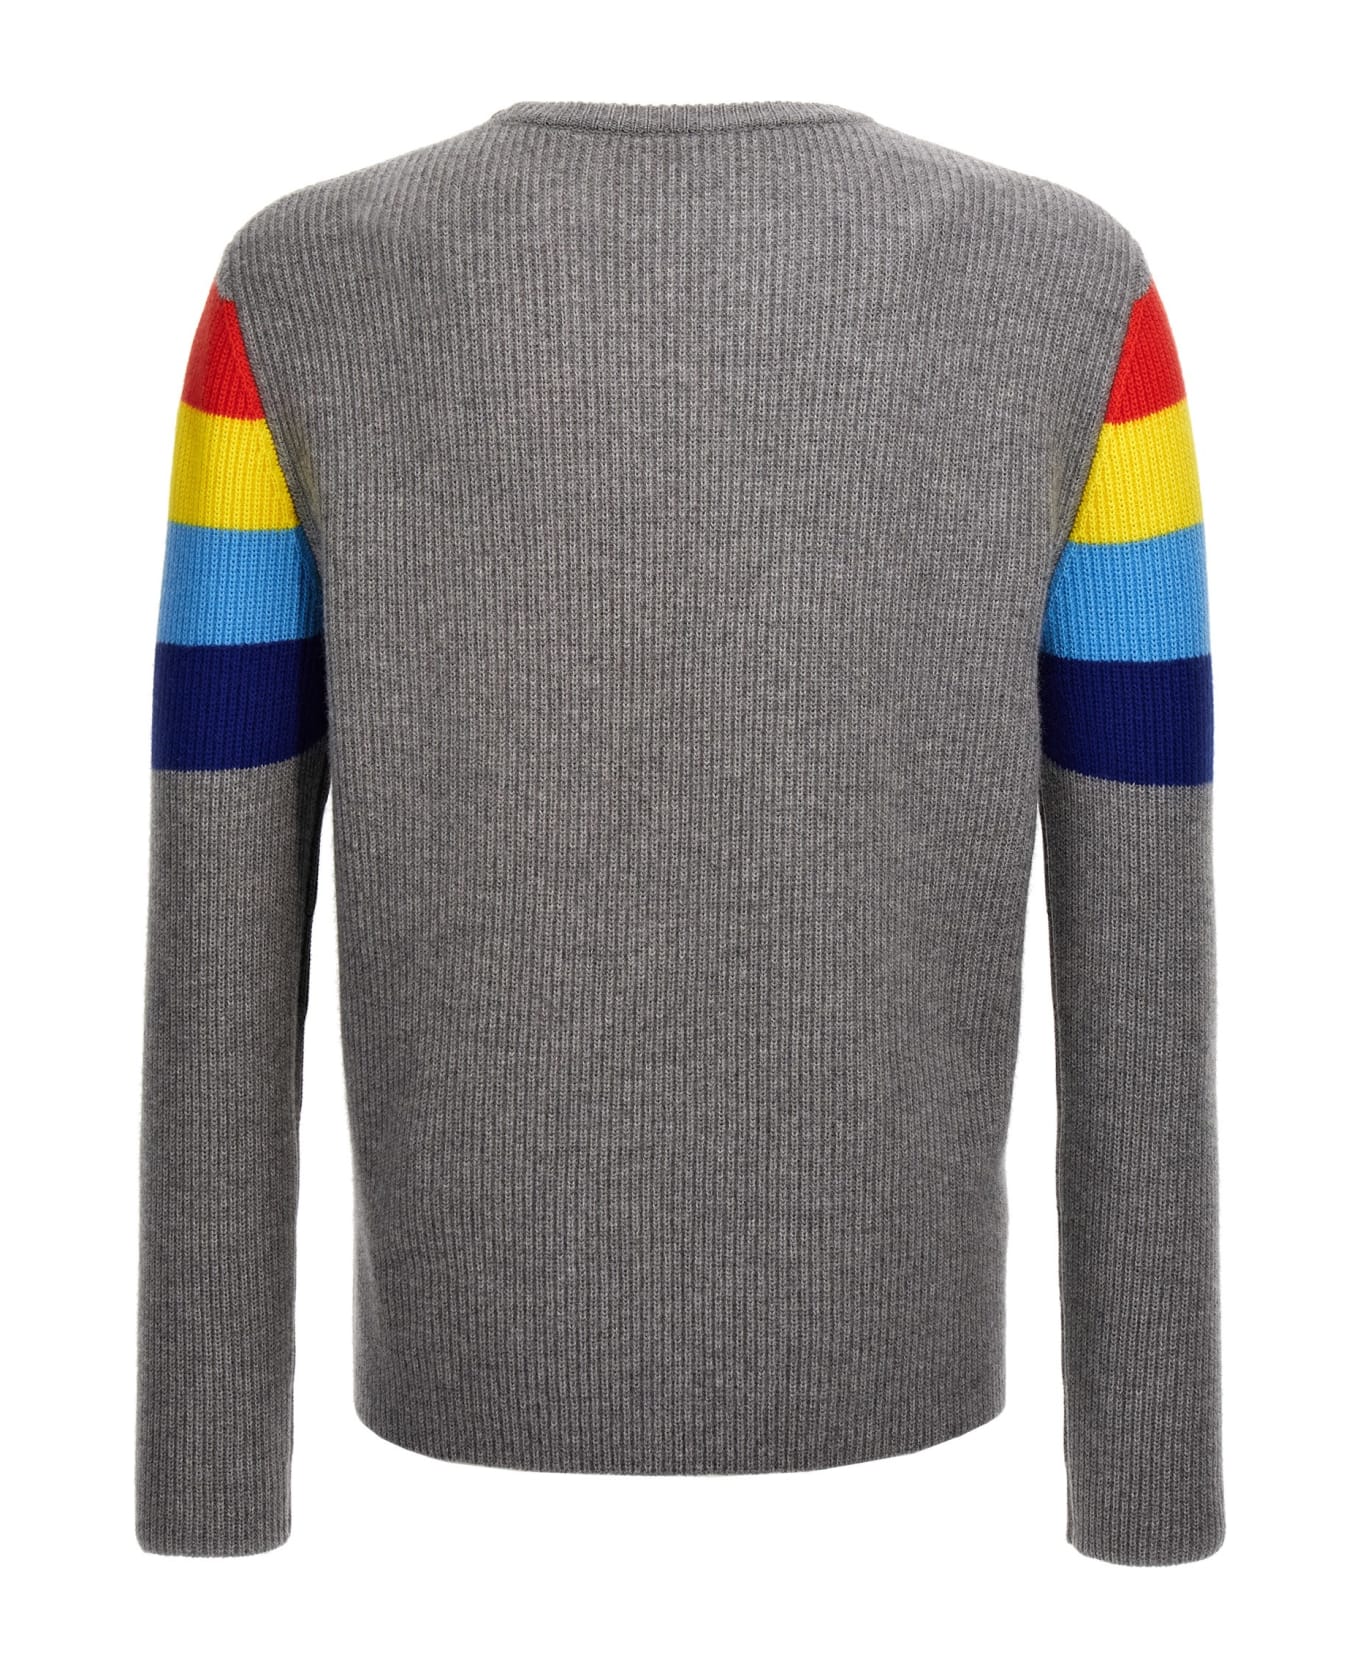 Loewe Colorblock Sweater - Multicolor ニットウェア